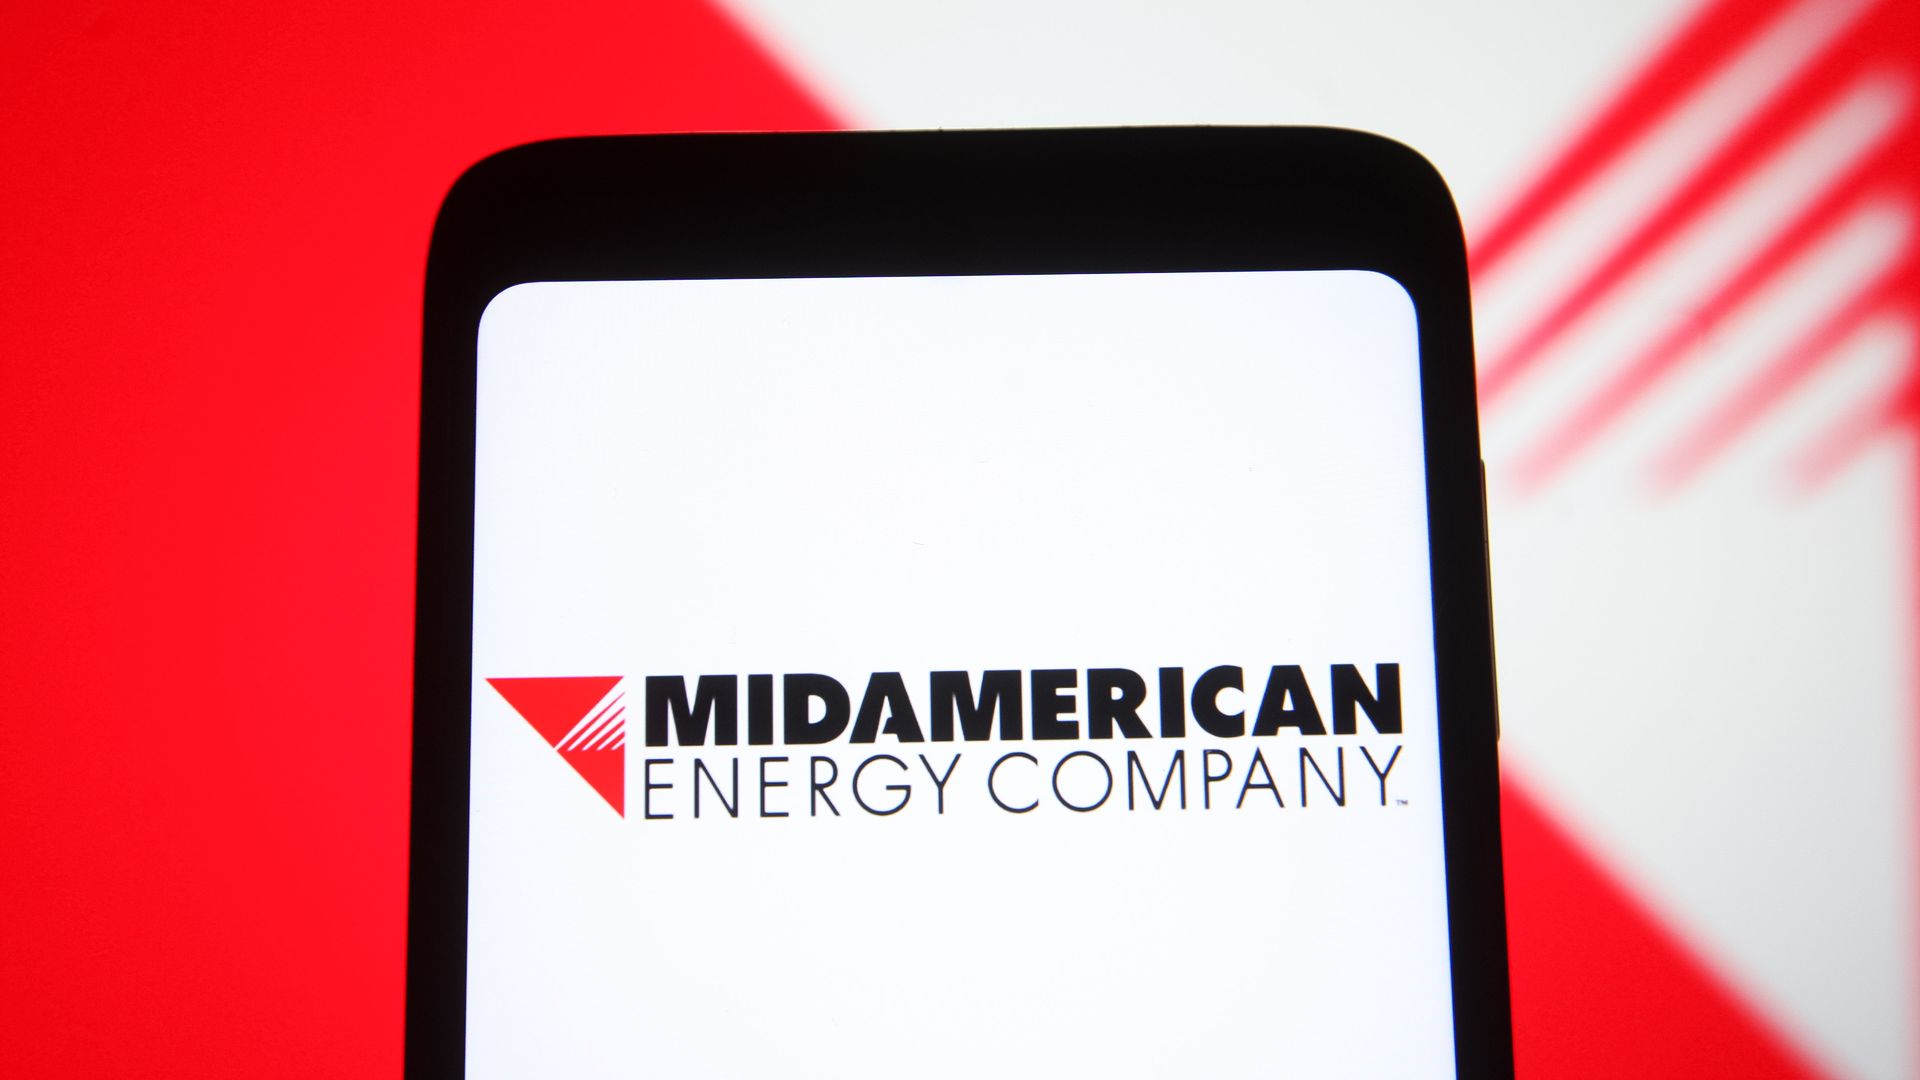 An illustration of MidAmerican Energy company